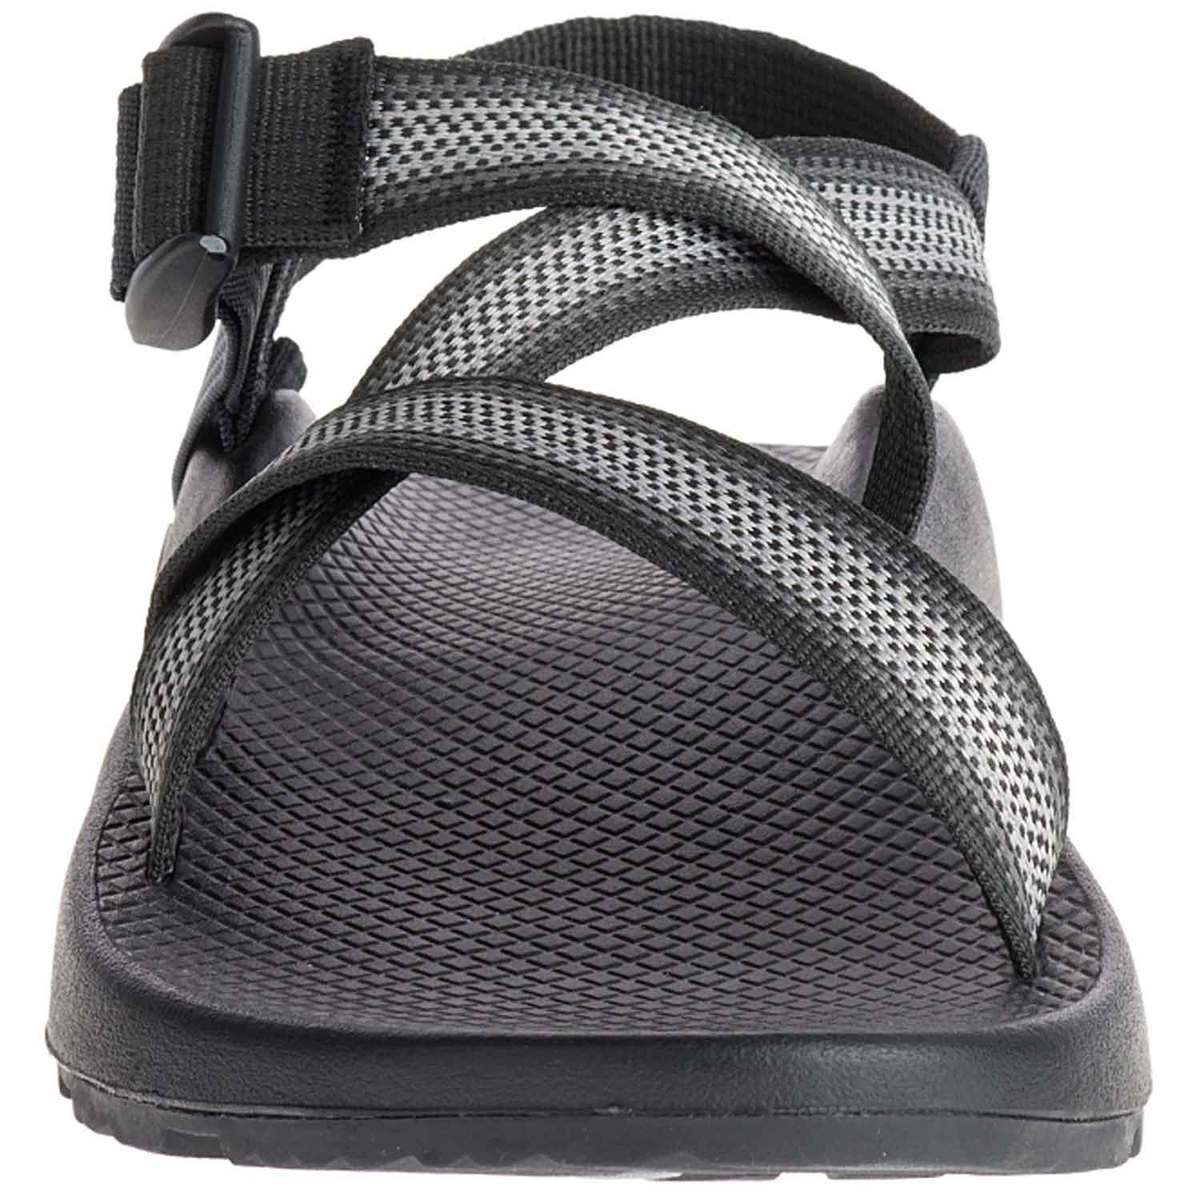 Chaco Men's Z/1 Classic Open Toe Sandals - Gray - Size 10 - Gray 10 ...